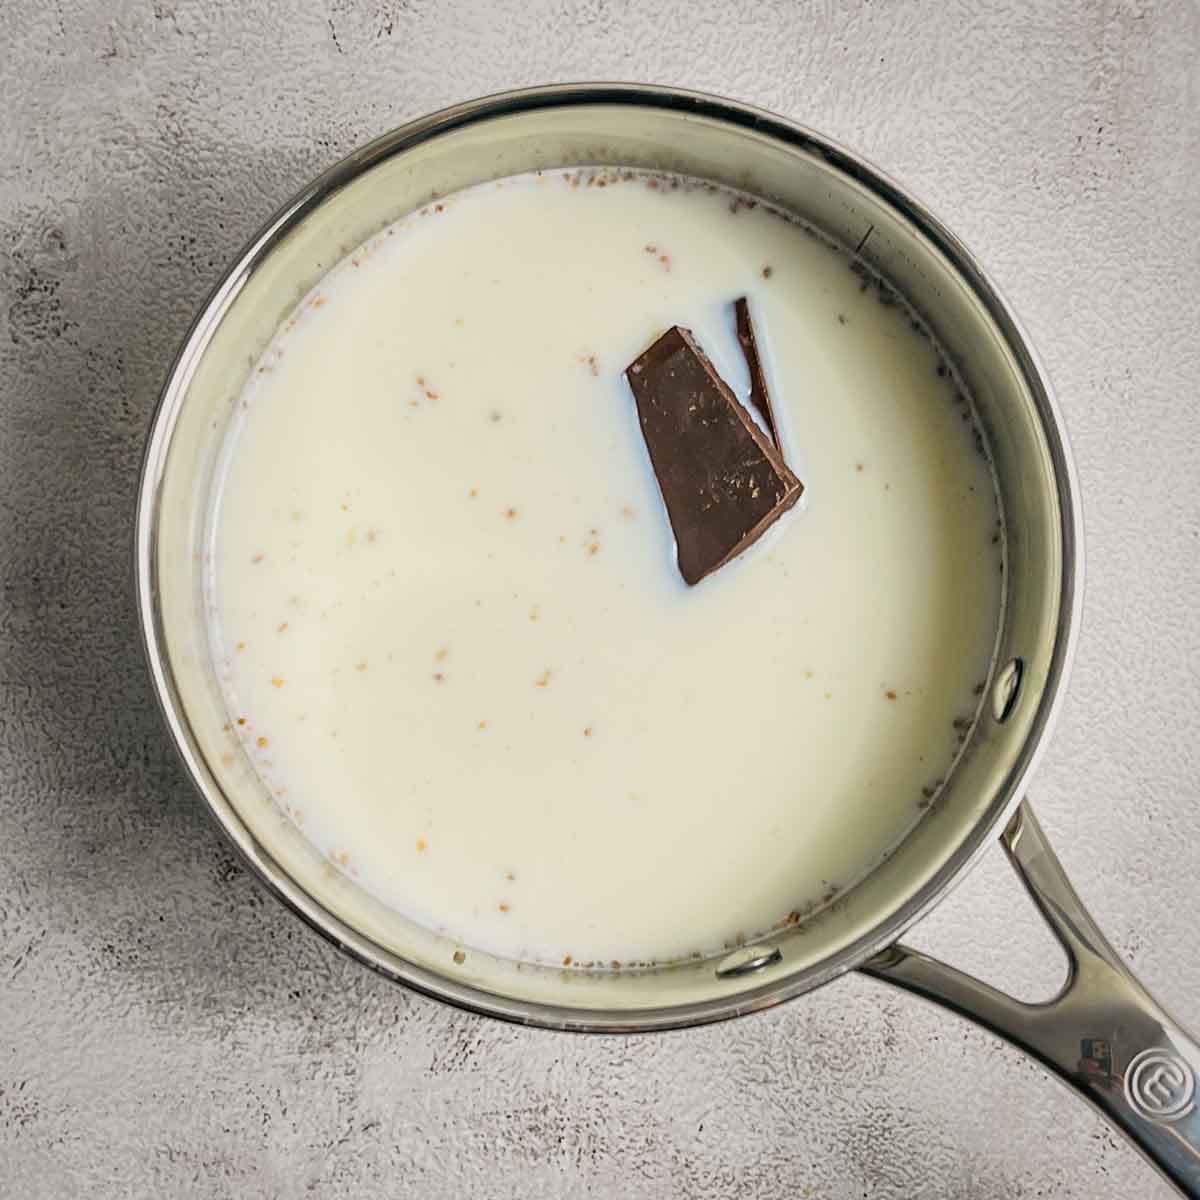 Chocolate and sugar in warm milk.